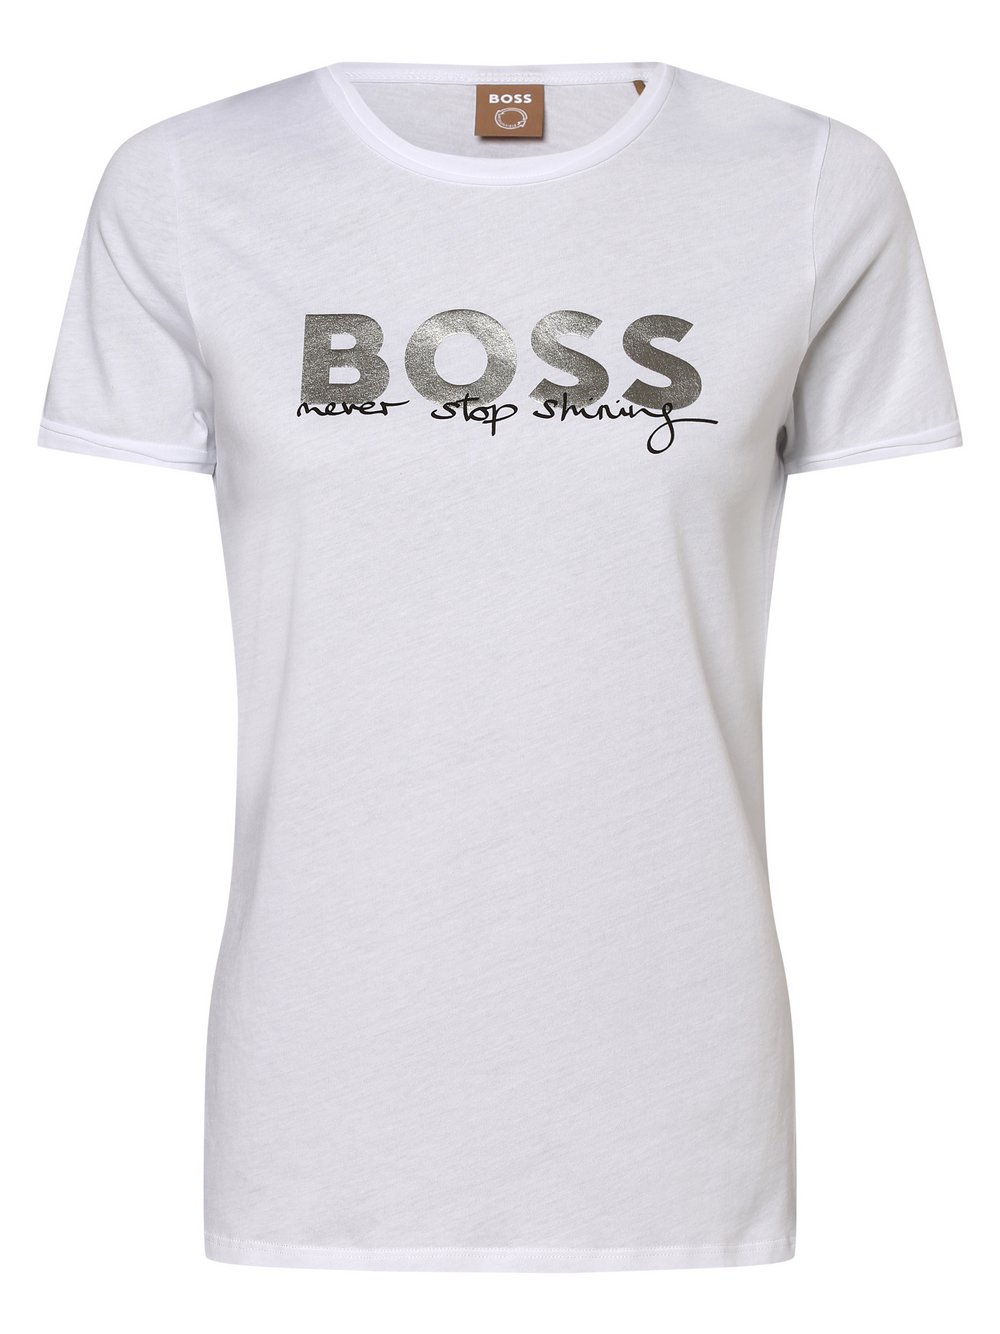 BOSS - T-shirt damski – C_Elogo_13, biały